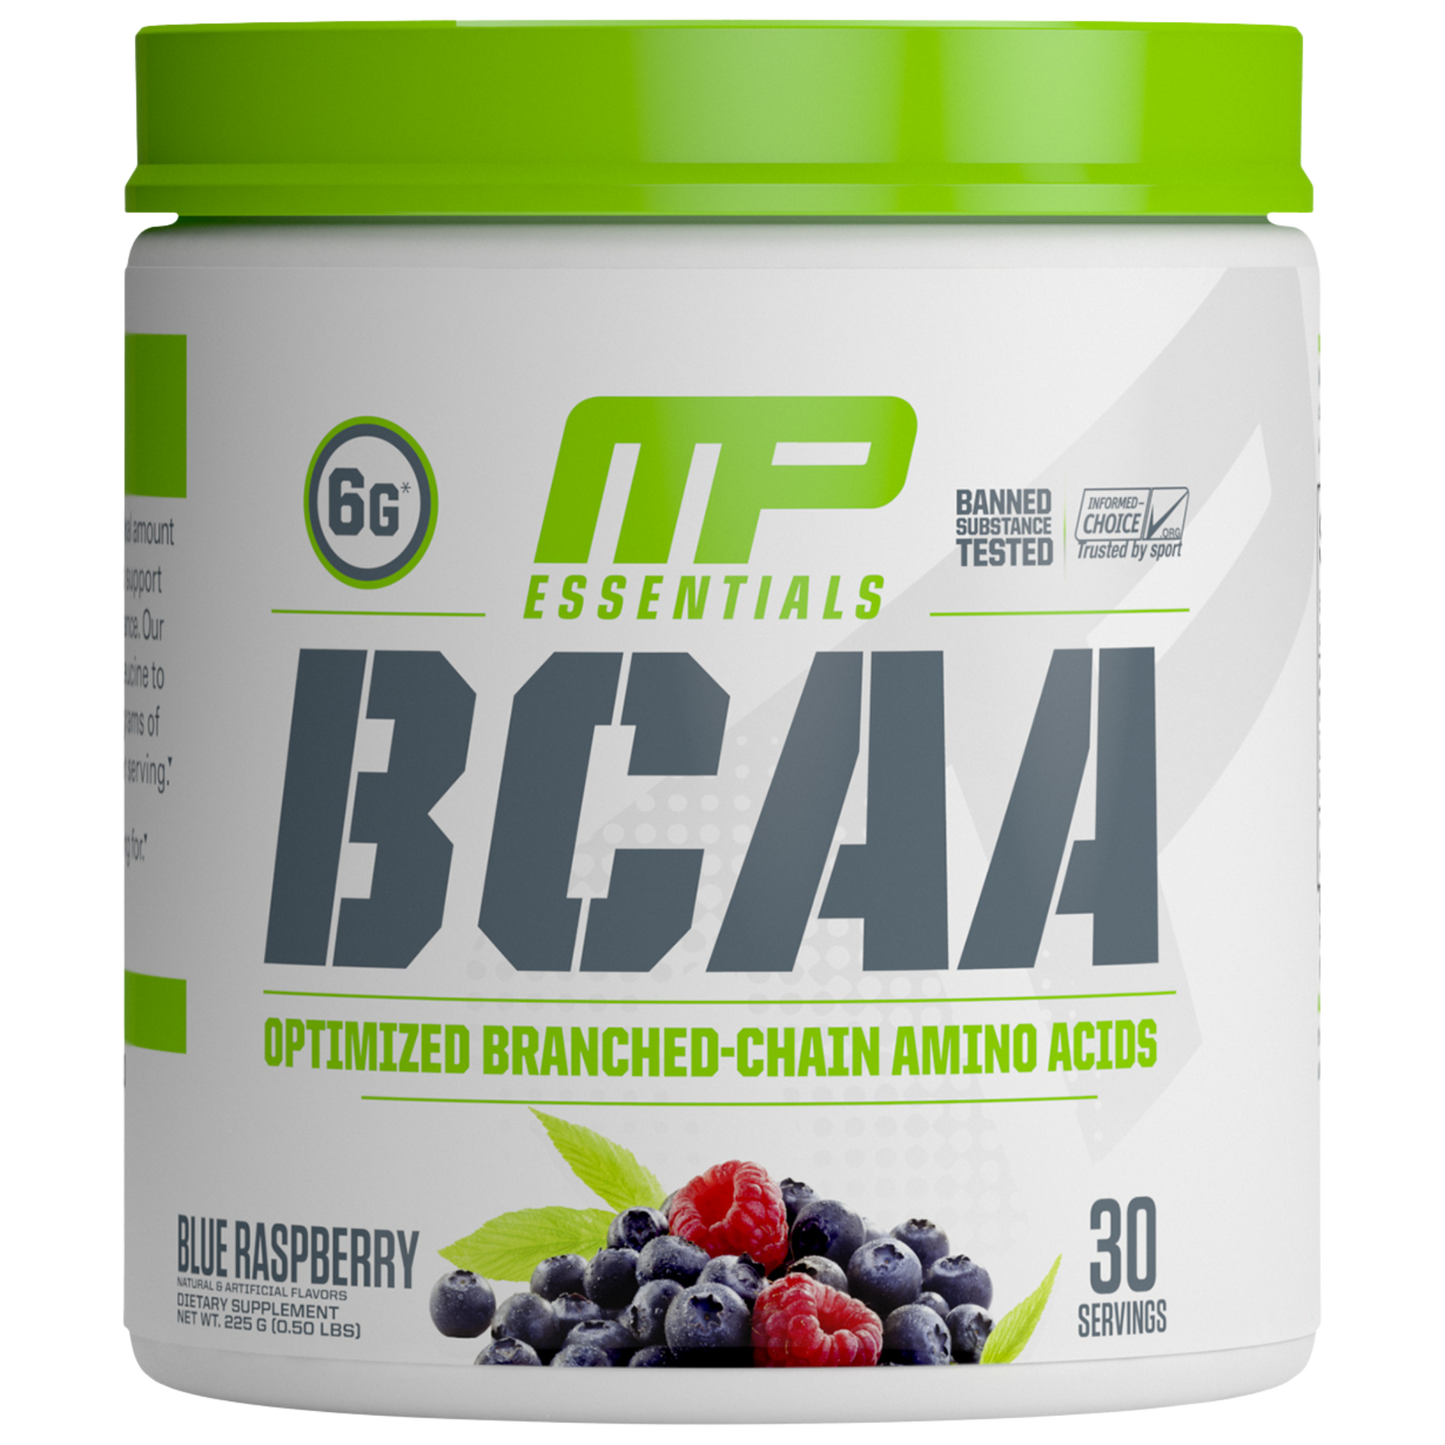 Muscle Pharm-MP Essentials BCAA